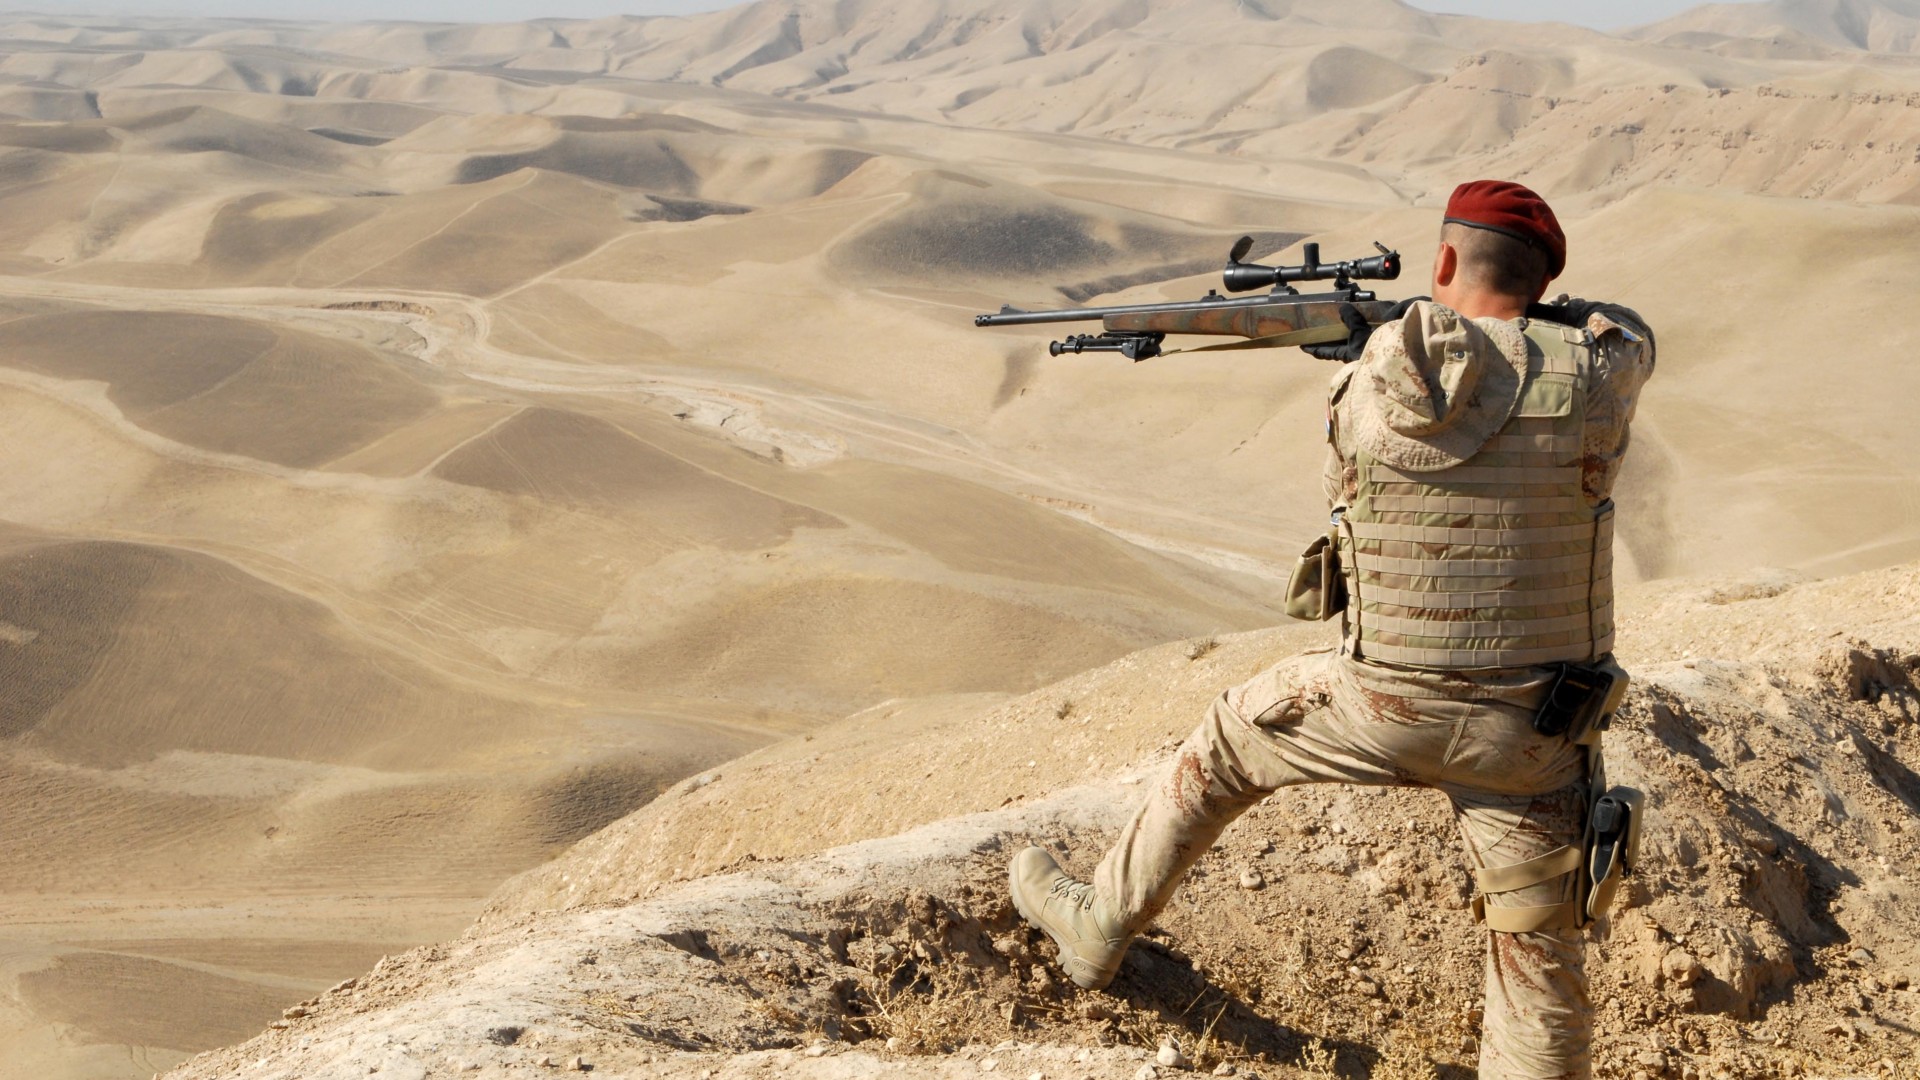 снайперская винтовка, солдат, снайпер, пустыня, EM 992, soldier, sniper, rifle, Elmech, EMM 992, desert (horizontal)